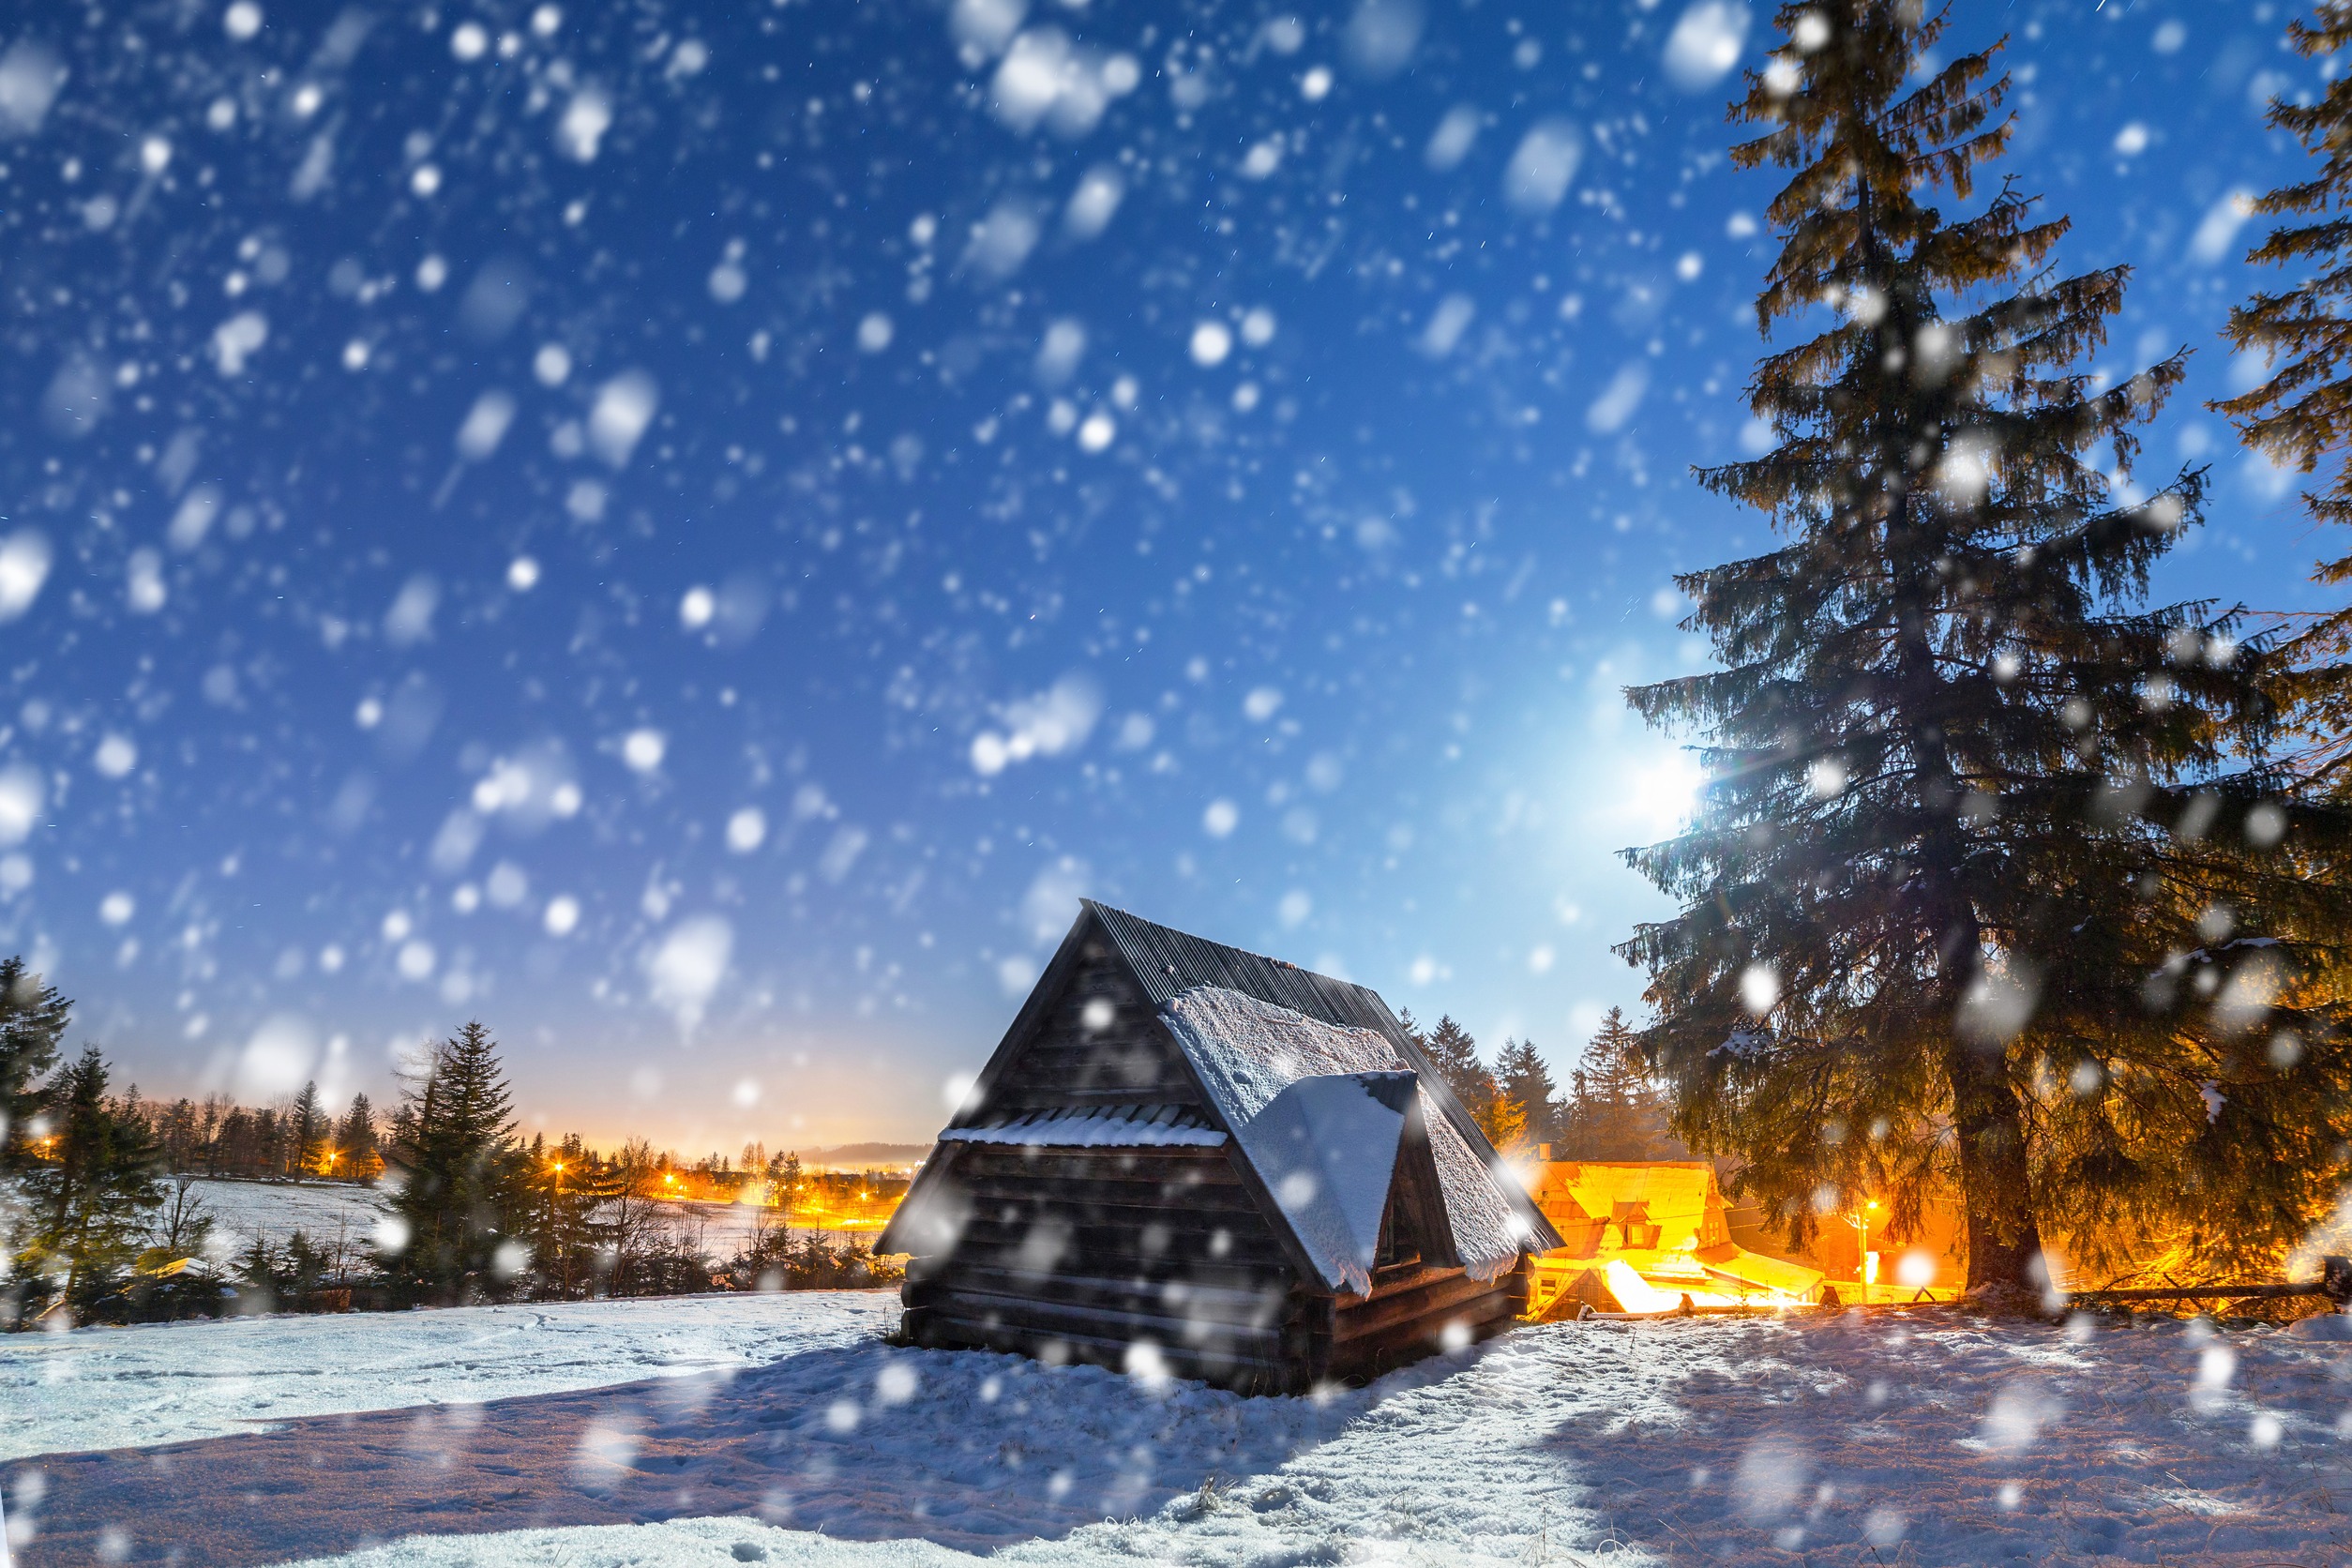 A log cabin viewed through a flurry of snow.